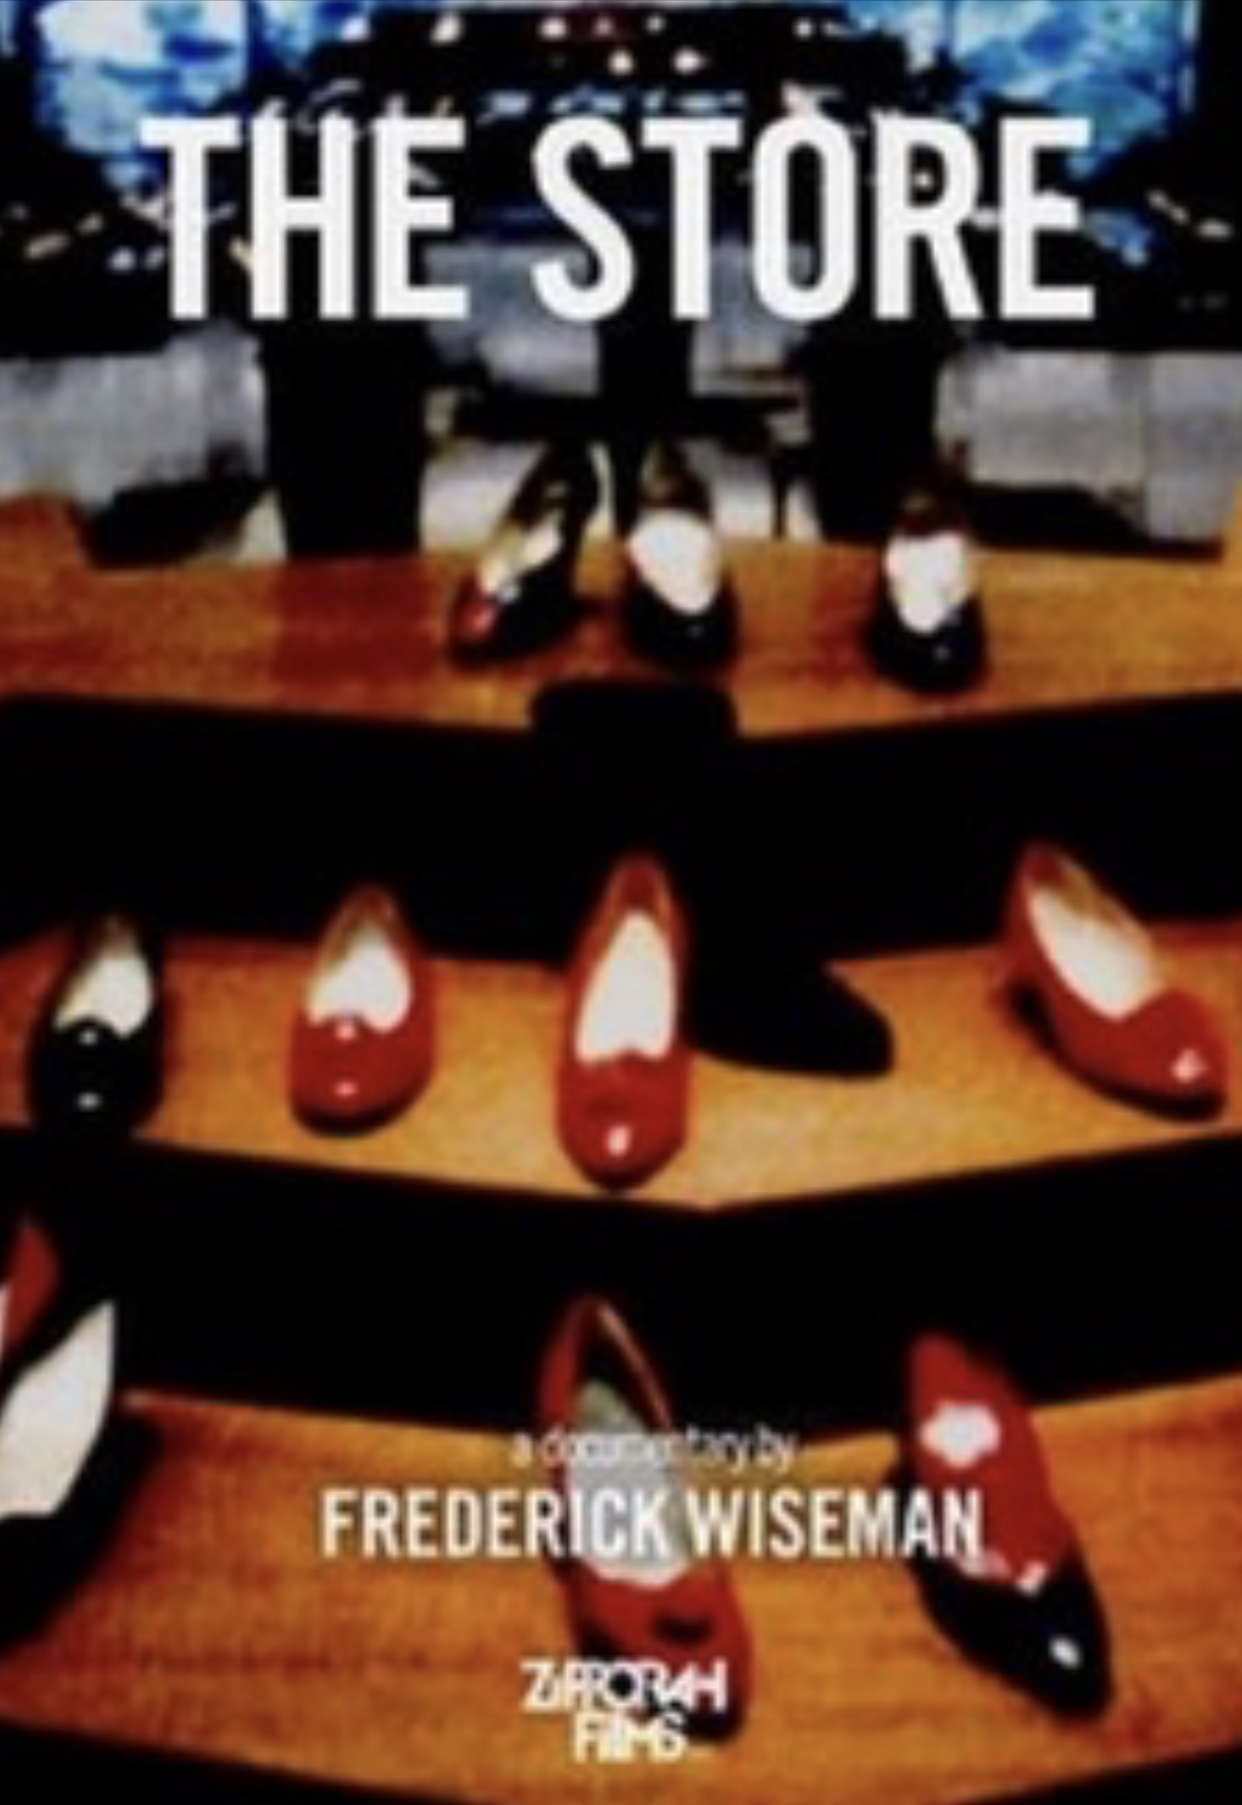 The Store (1983) Screenshot 2